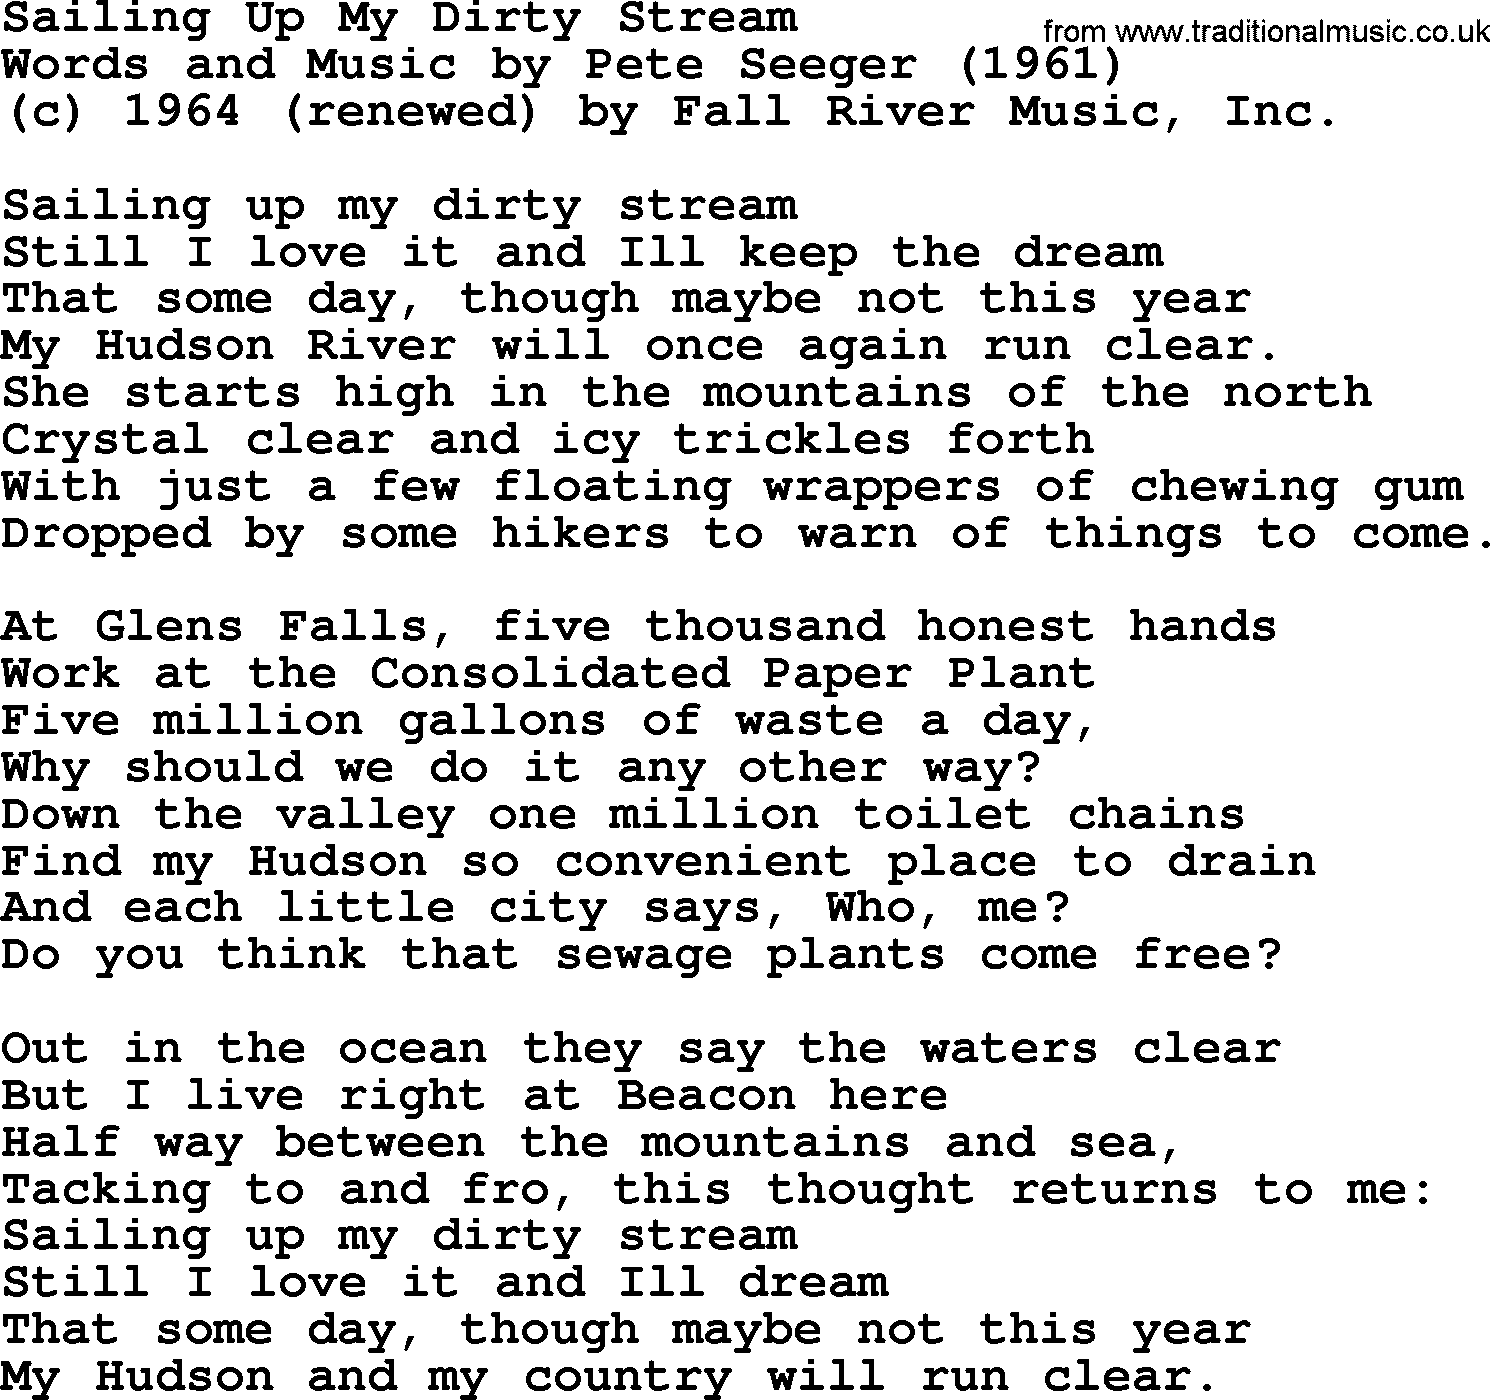 Pete Seeger song Sailing Up My Dirty Stream-Pete-Seeger.txt lyrics